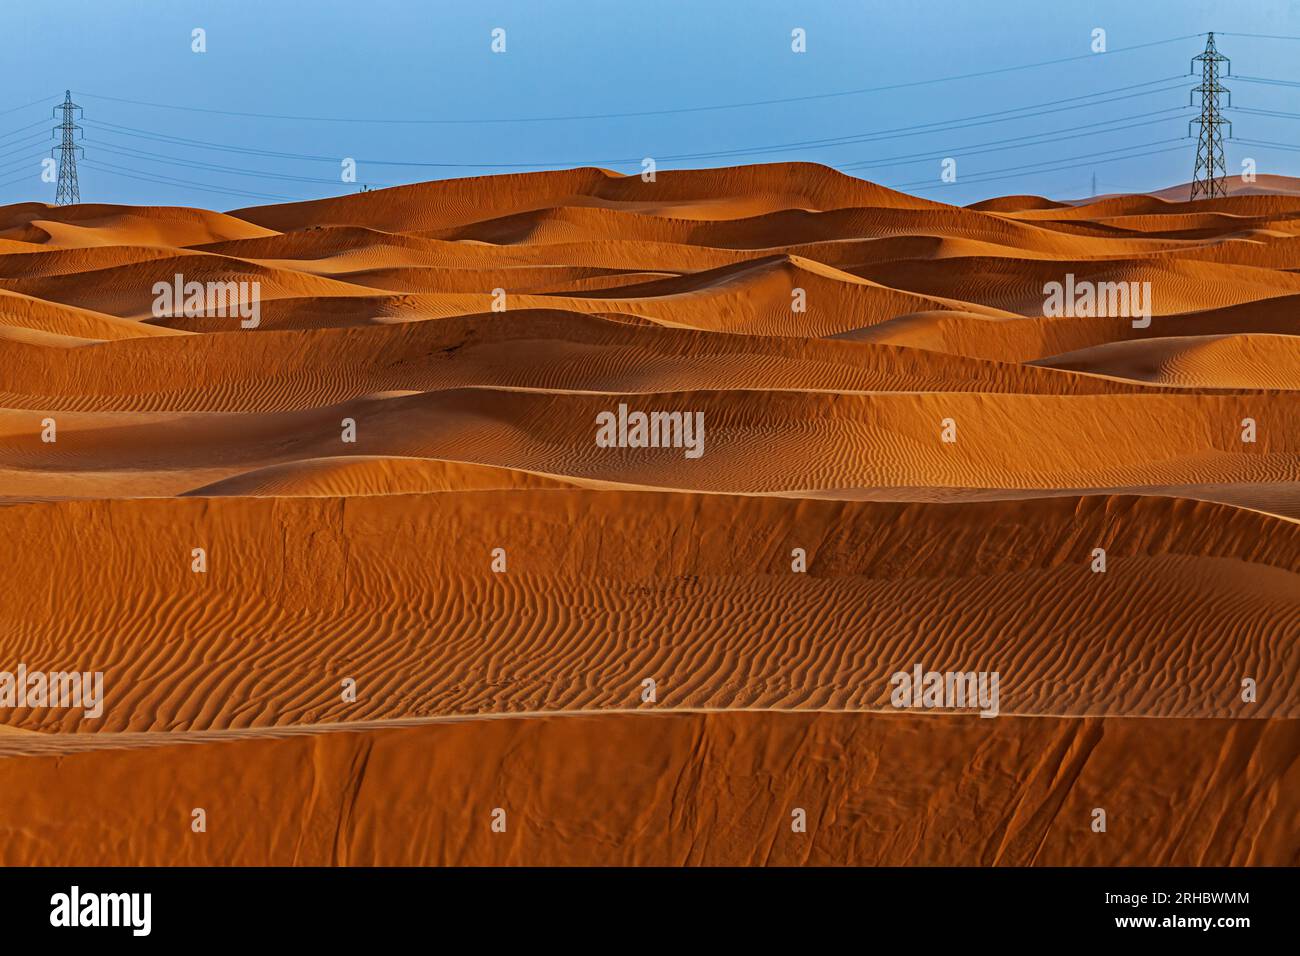 Electricity pylons amongst orange sand Dunes in desert, Saudi Arabia Stock Photo